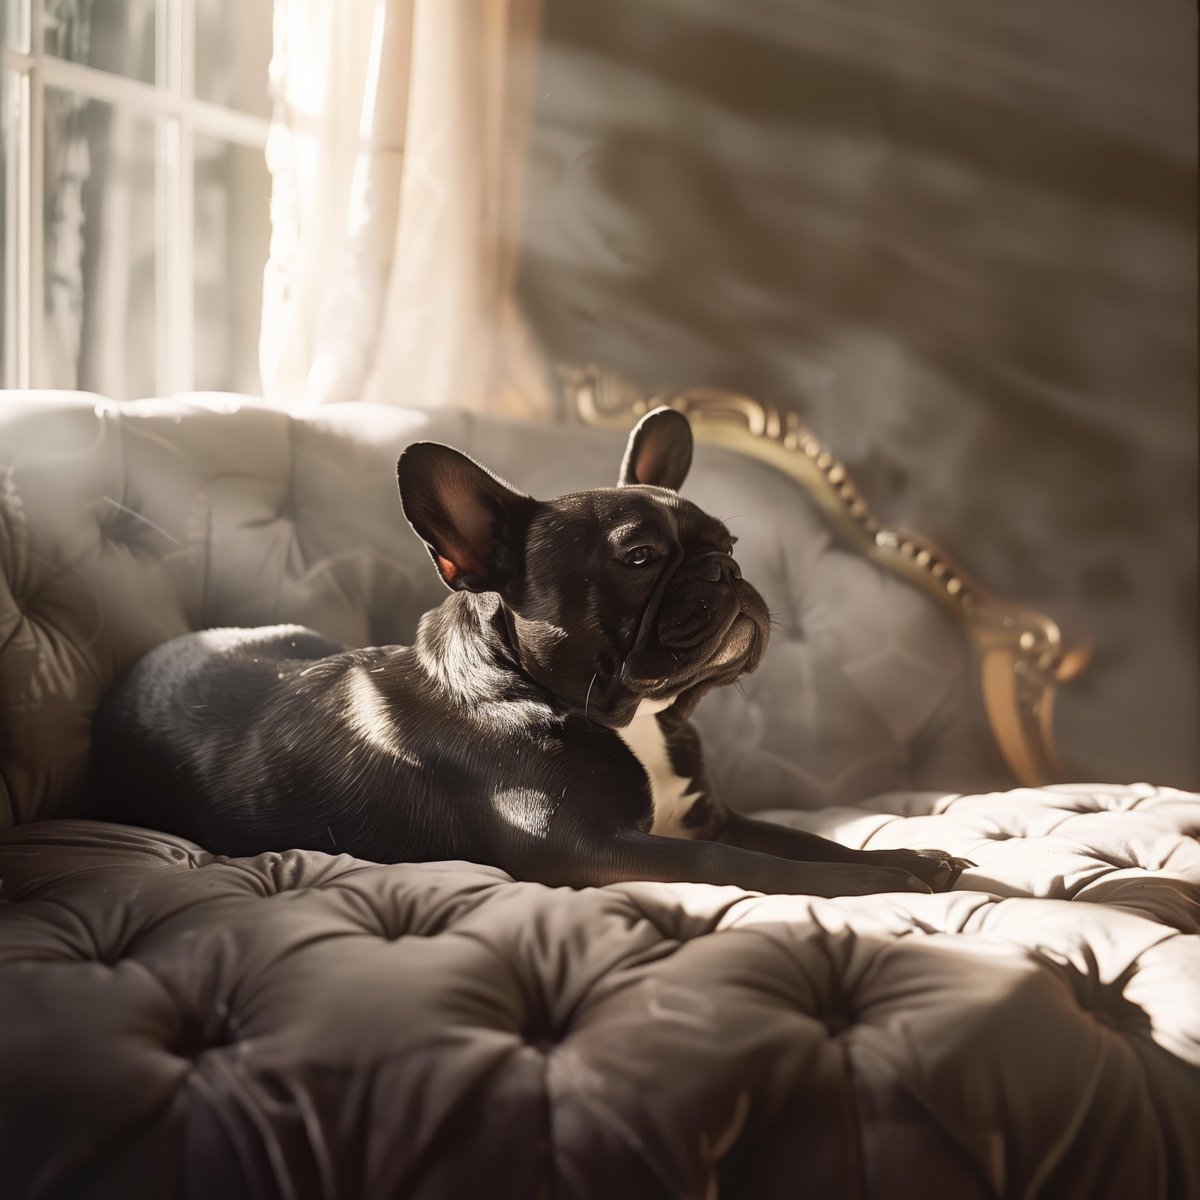 Sunlit Serenity on a Sumptuous Sofa

#LuxuryLiving #FrenchBulldogChill #ElegantInteriors #PetPortrait